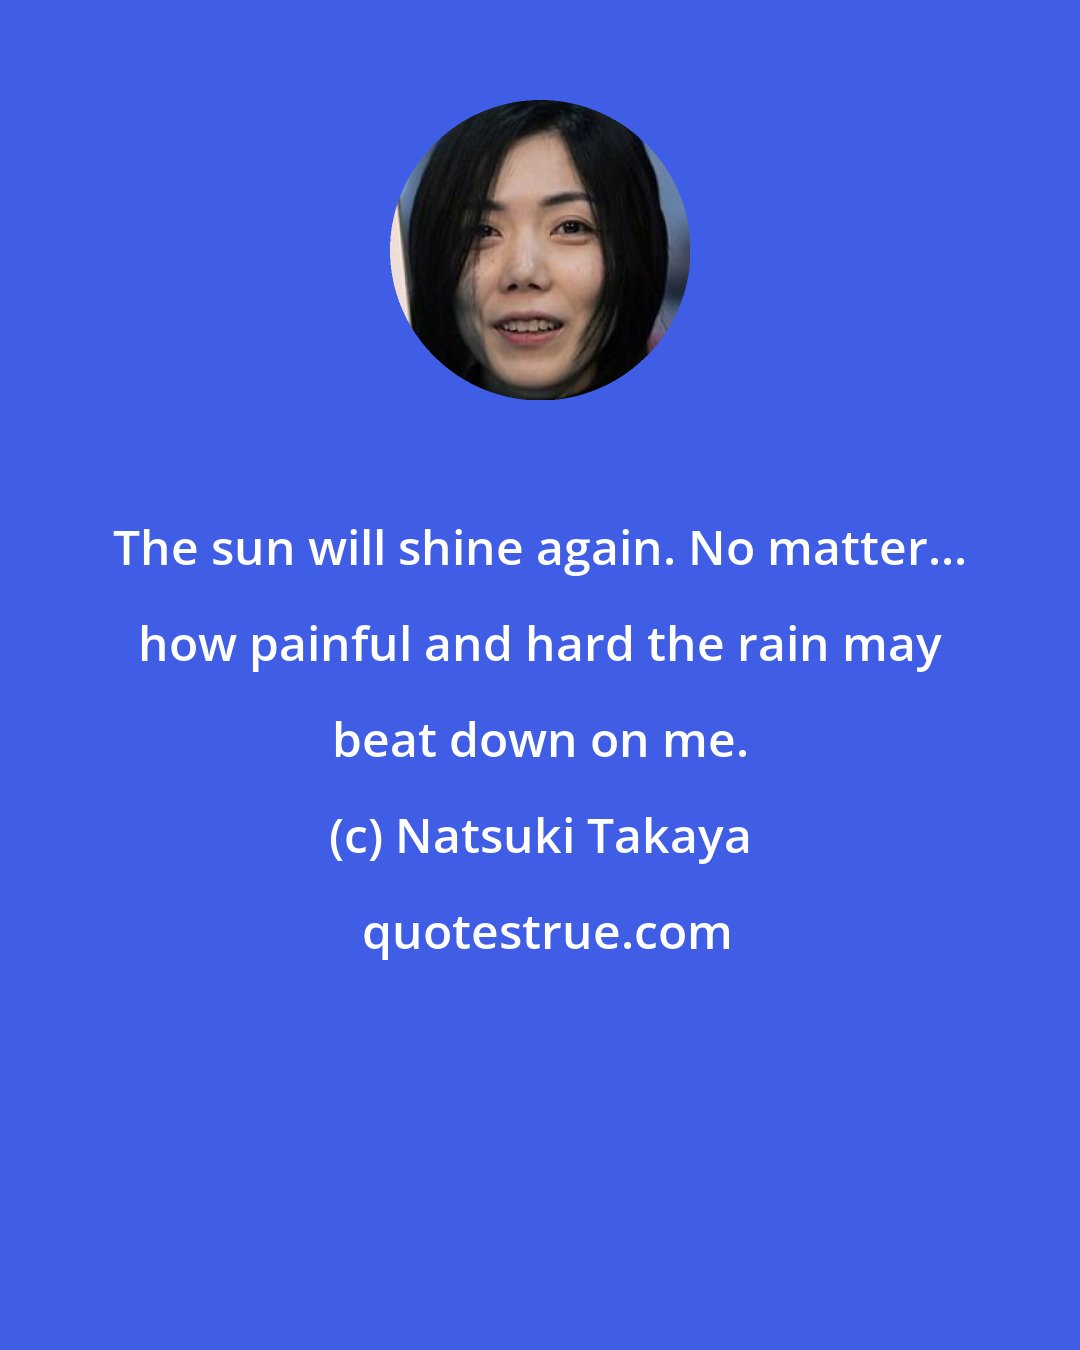 Natsuki Takaya: The sun will shine again. No matter... how painful and hard the rain may beat down on me.